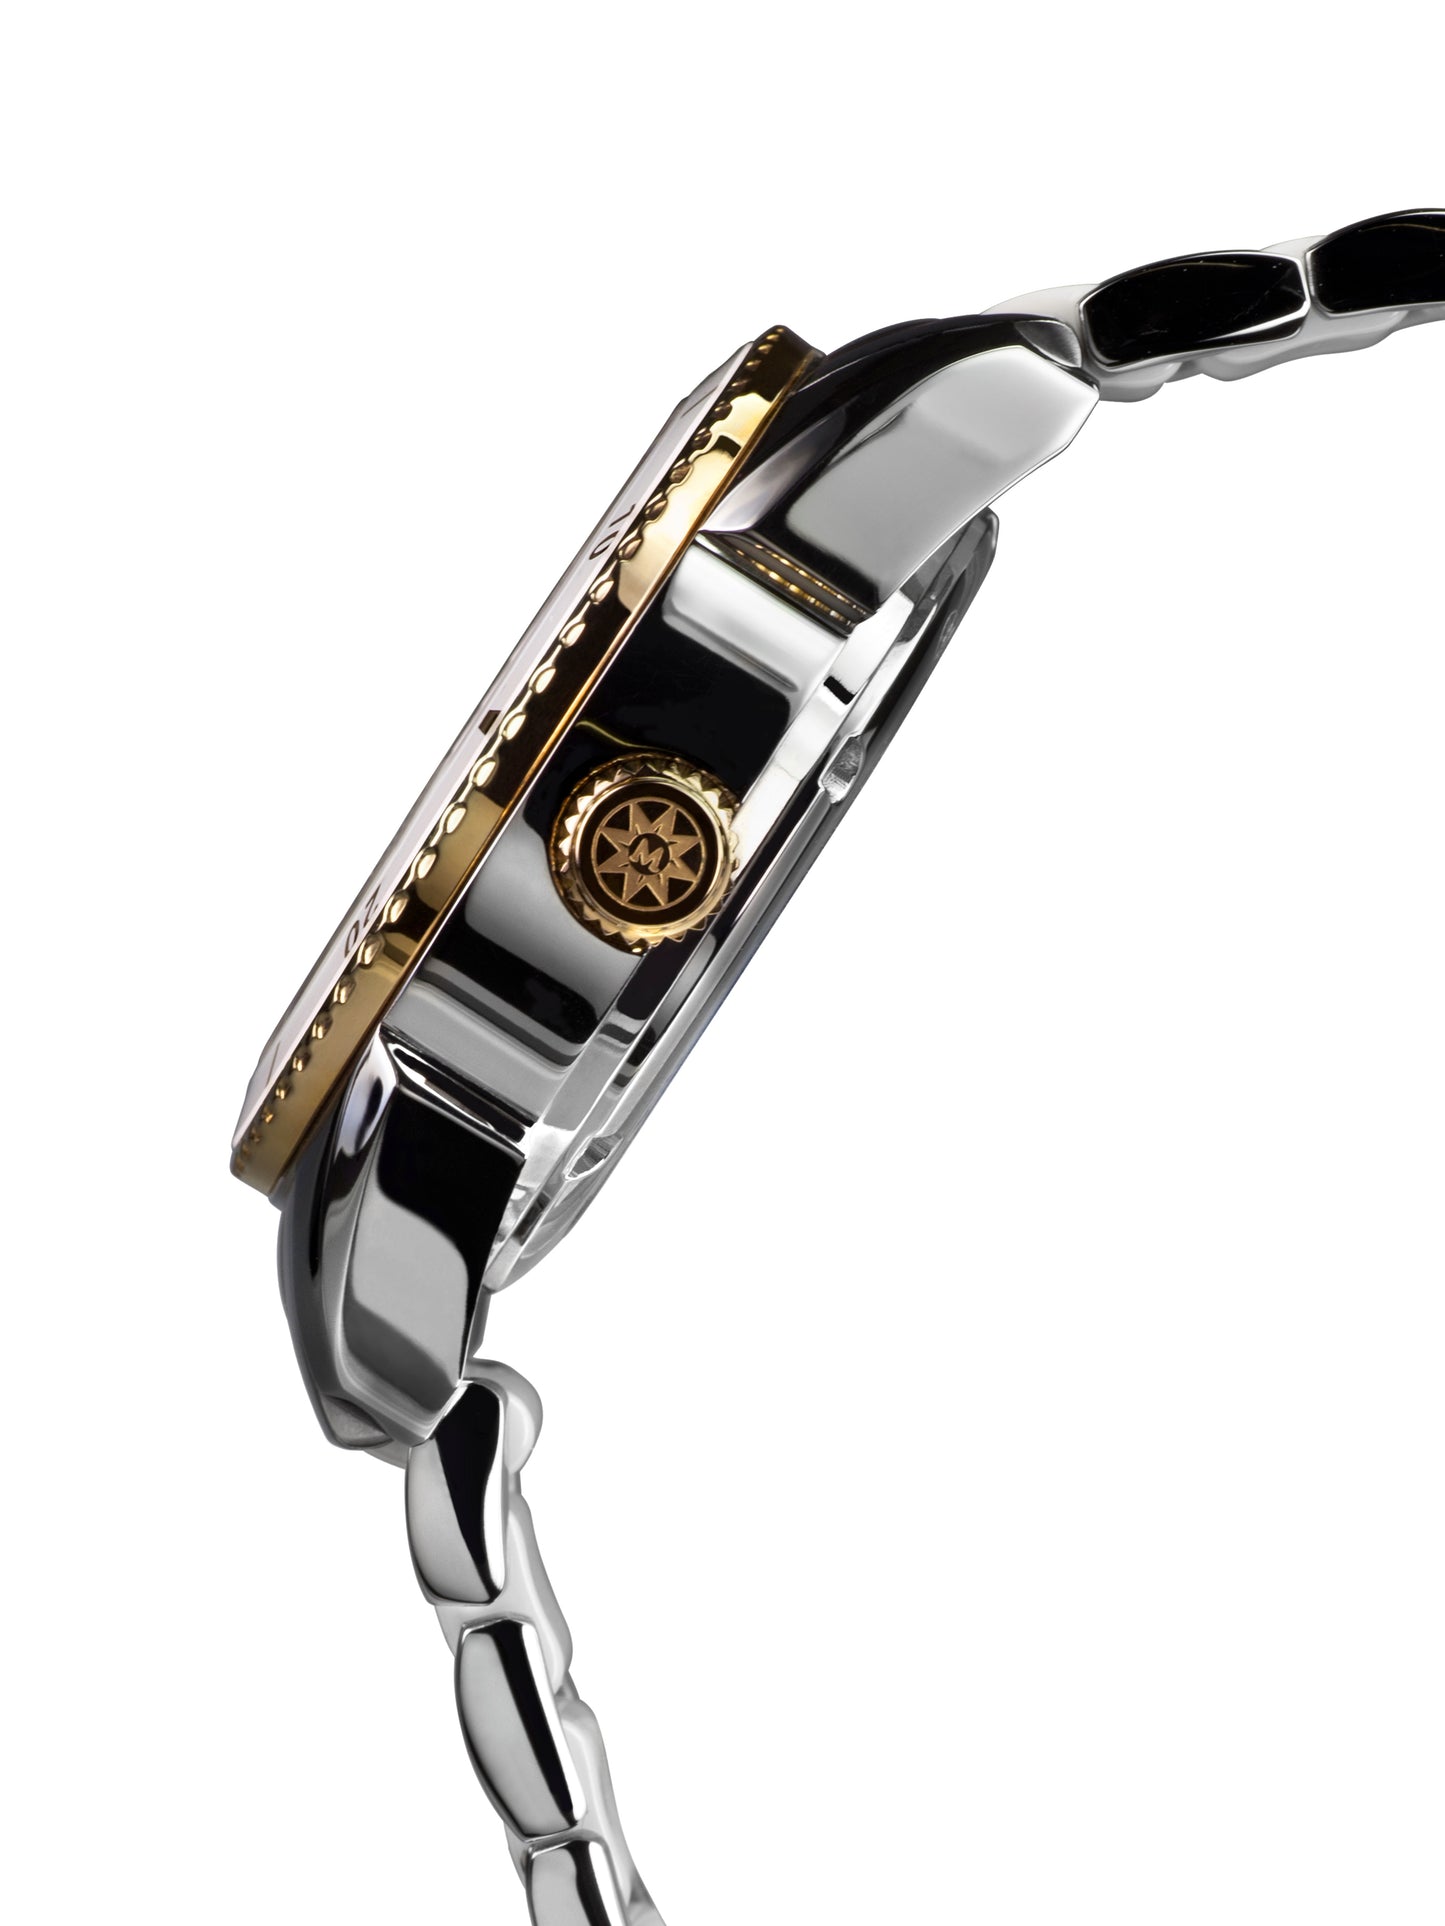 Automatic watches — La Magnifique — Mathis Montabon — Gold weiss II